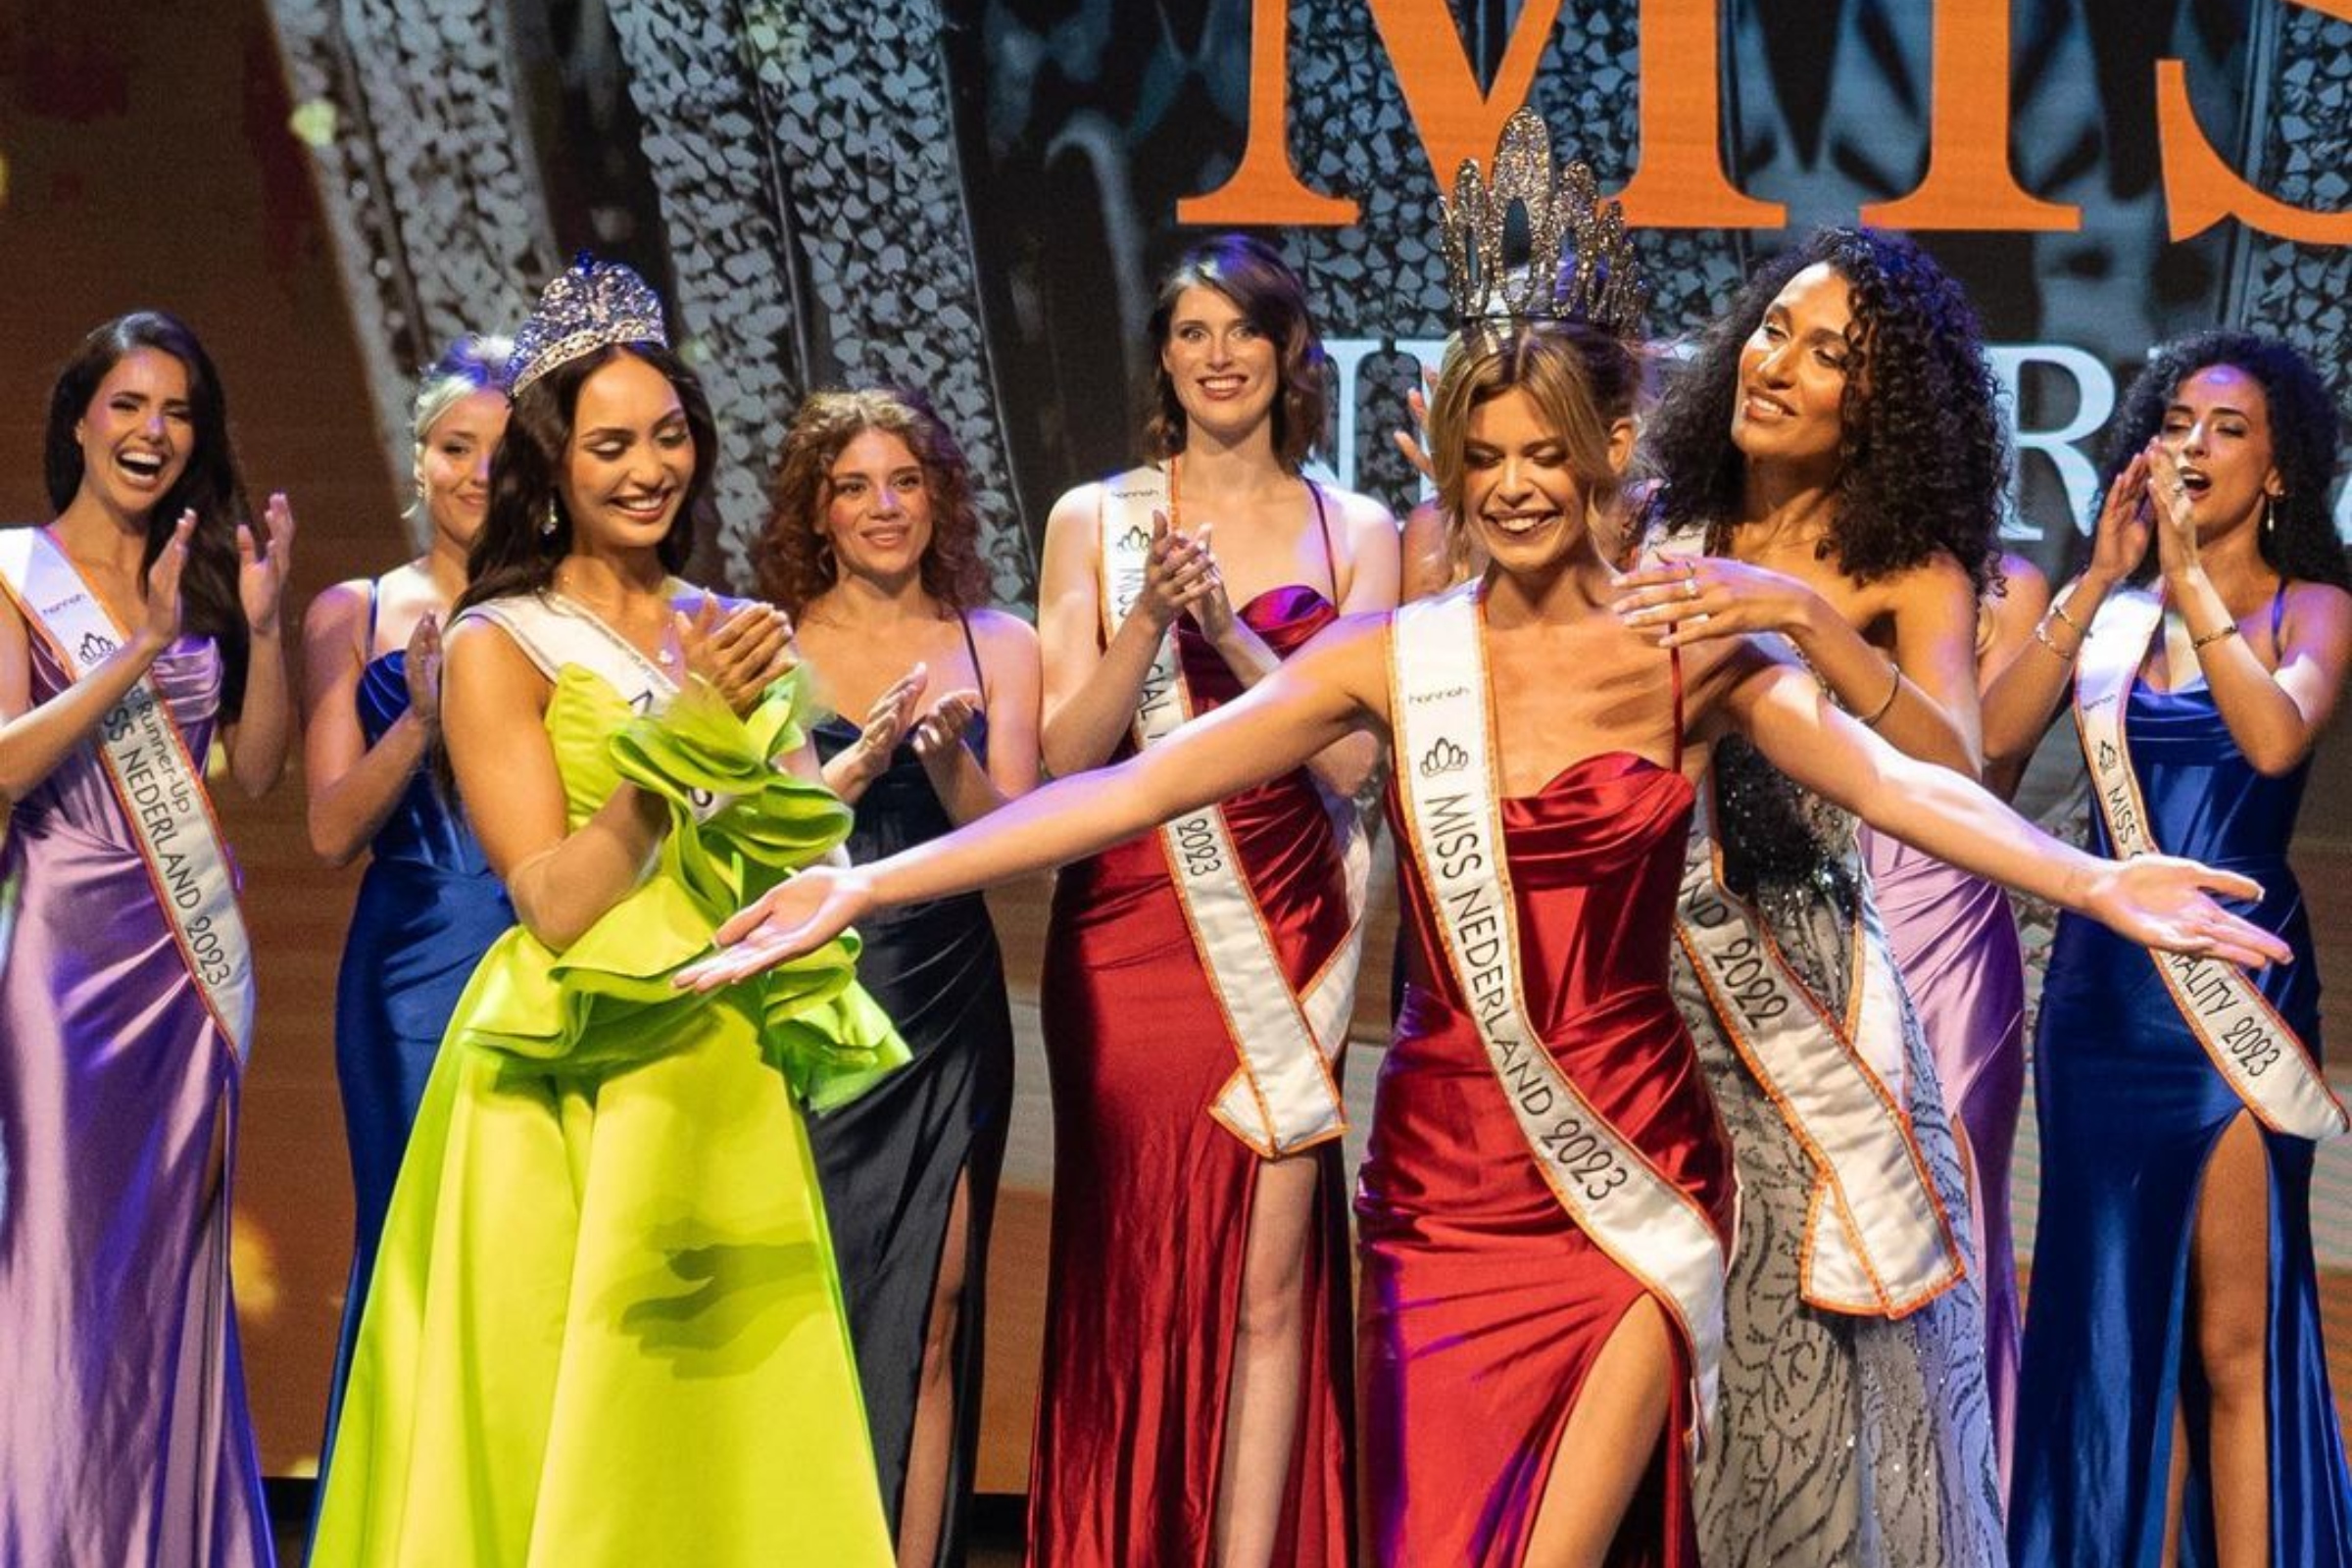 Transgender Woman Winning Miss Netherlands Sparks Furor—'Simply Evil'